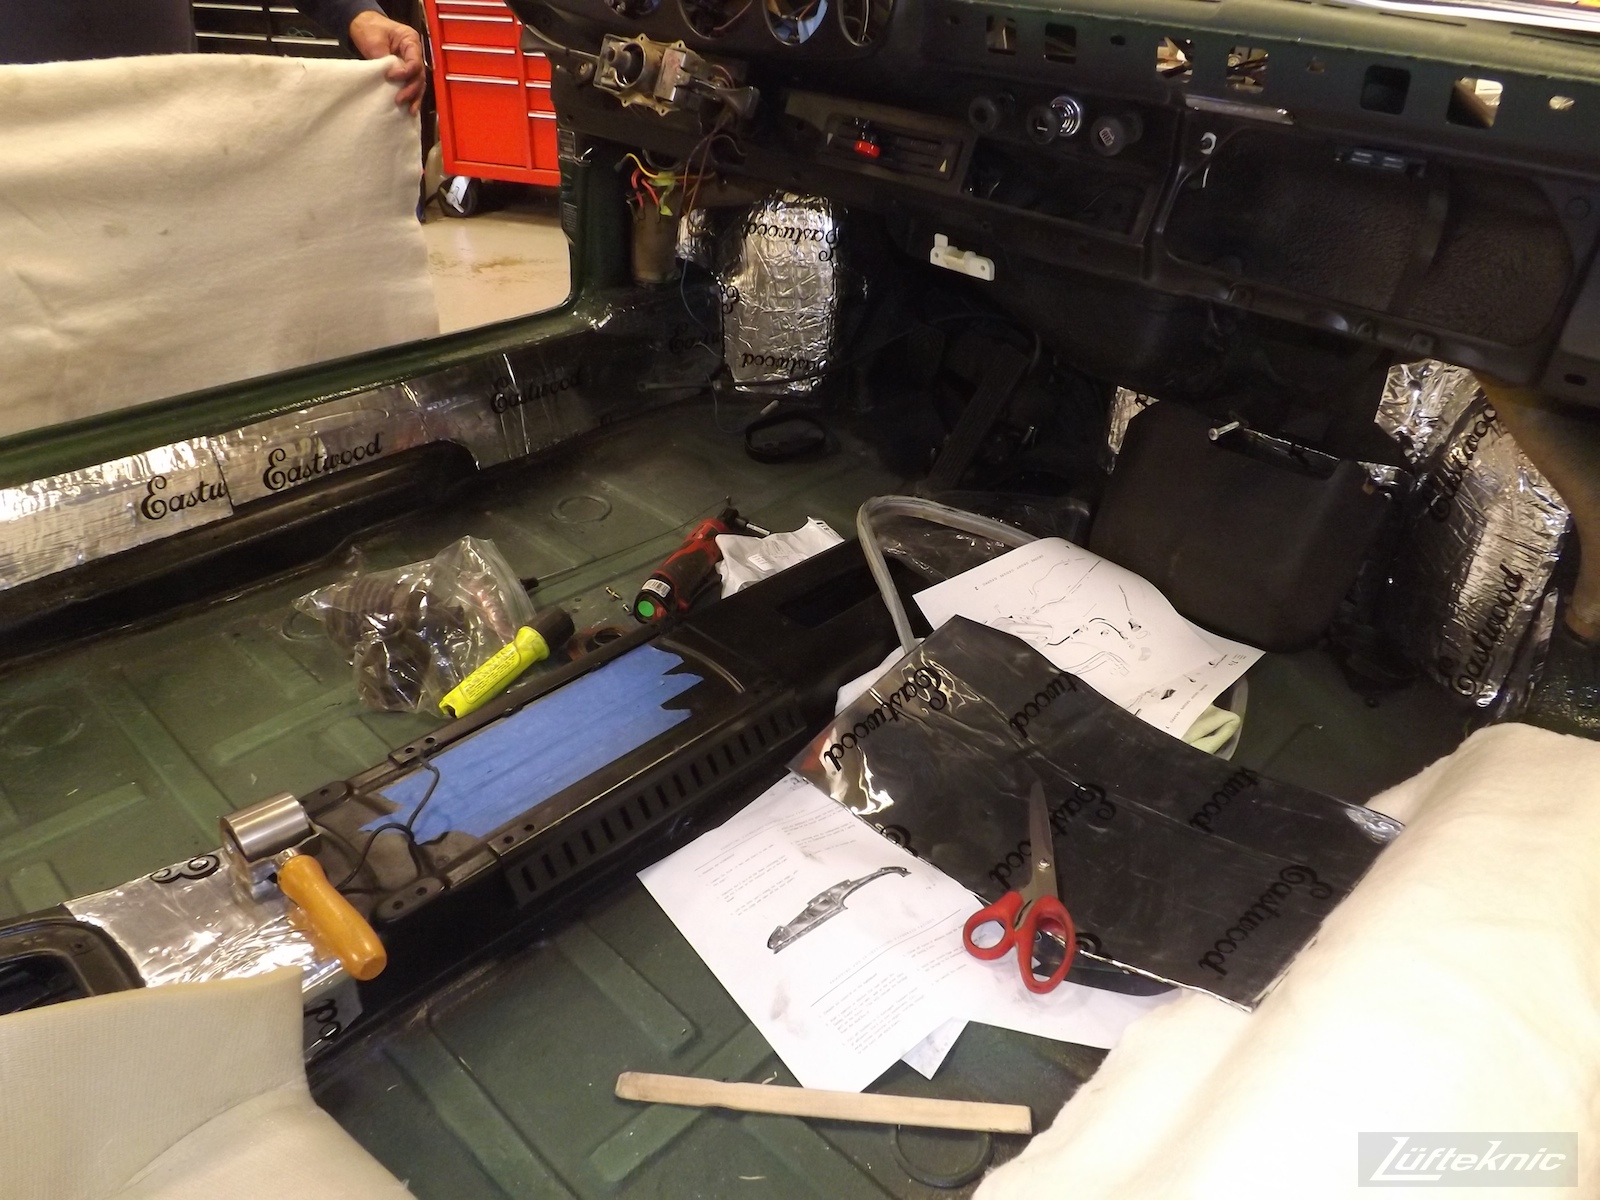 Installing Eastwood sound deadening panels on an Irish Green Porsche 912 undergoing restoration at Lufteknic.